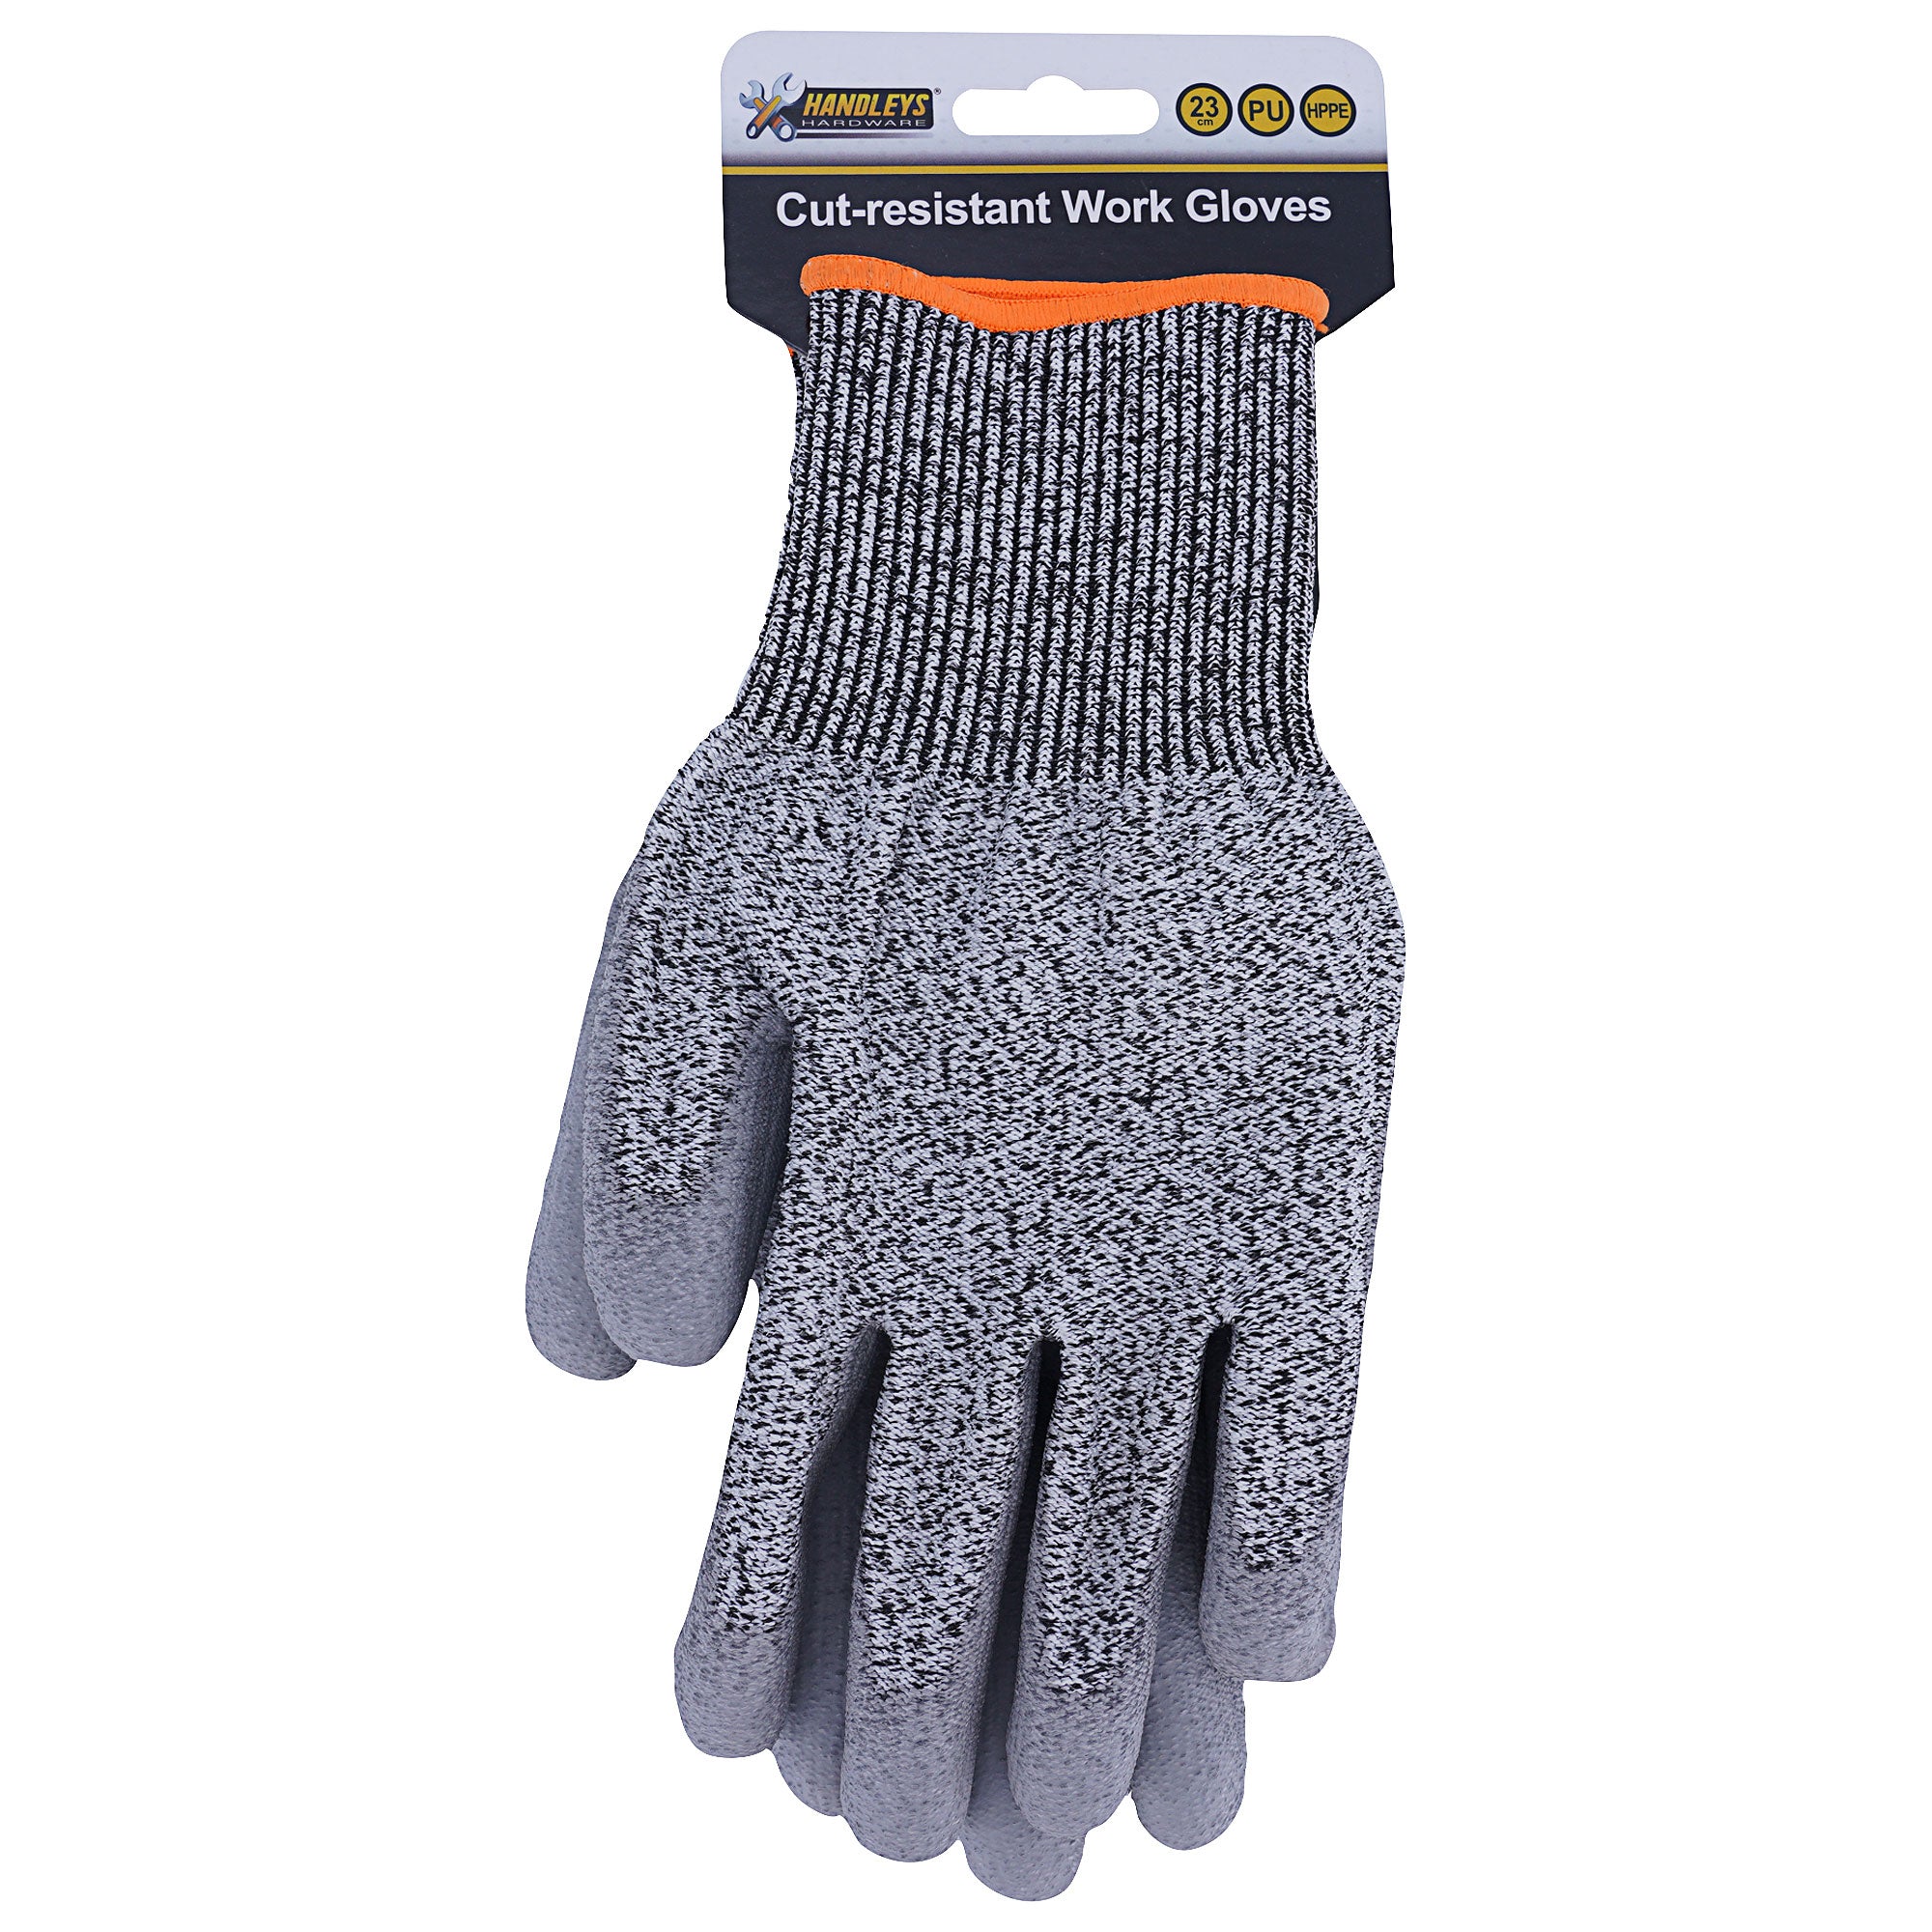 Handleys Cut Resistant work Gloves